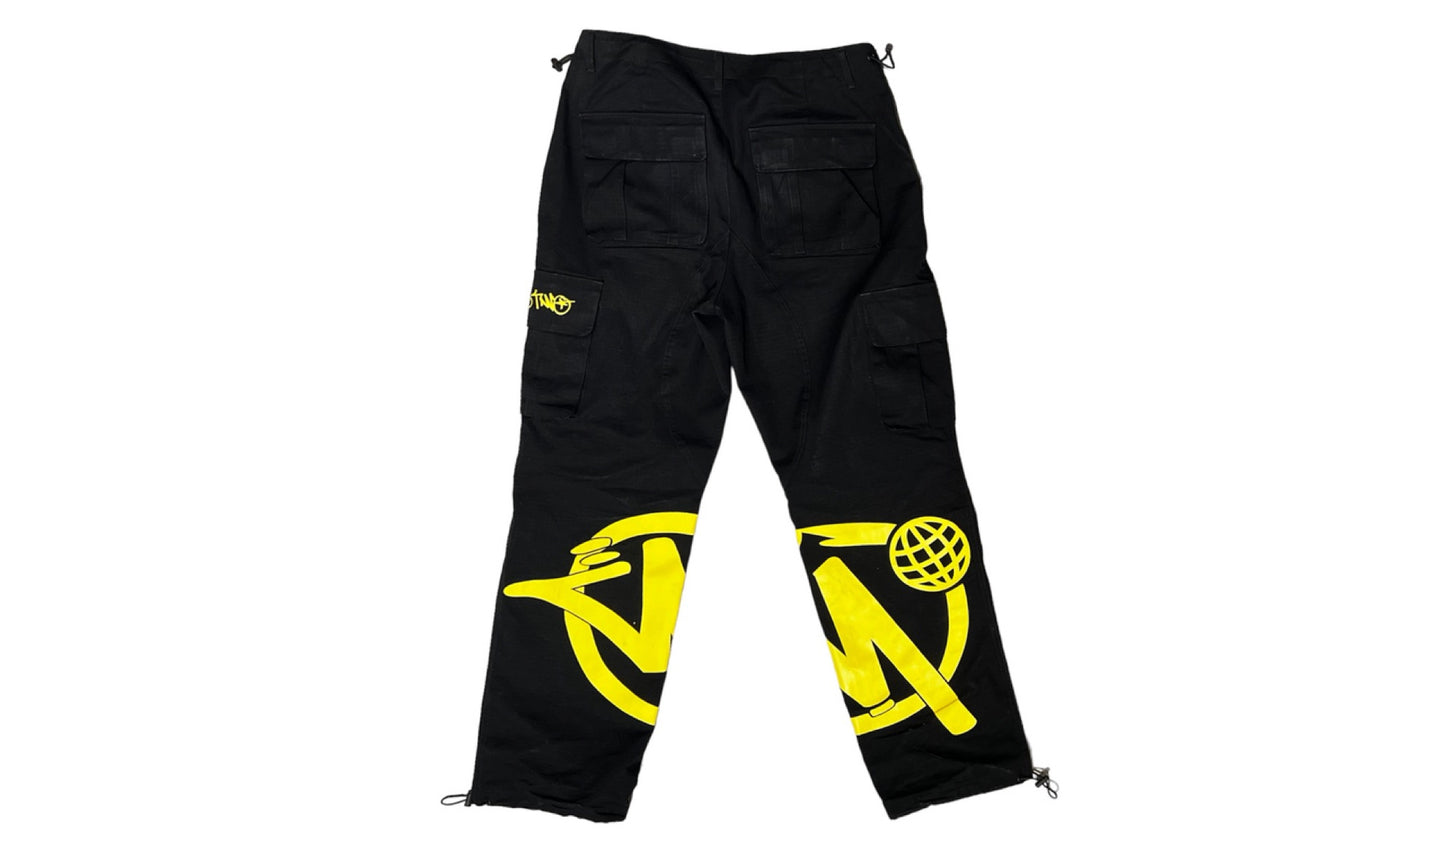 Minus two cargo pants black yellow